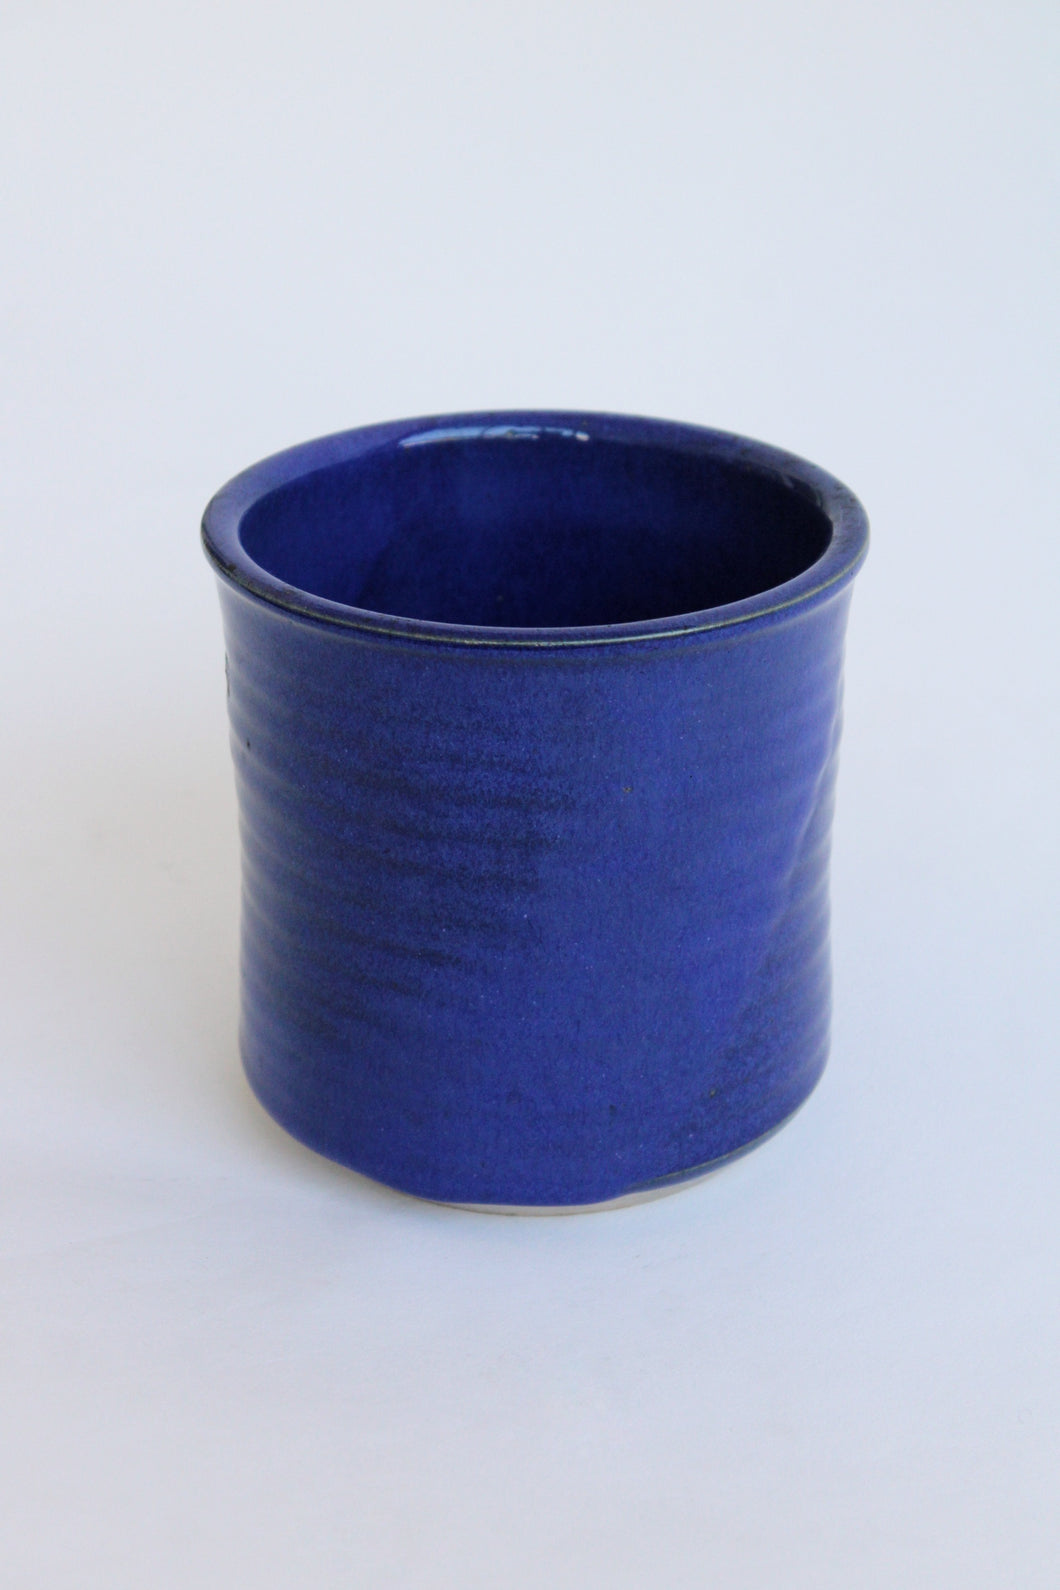 Small Cobalt Studio Pottery Vessel